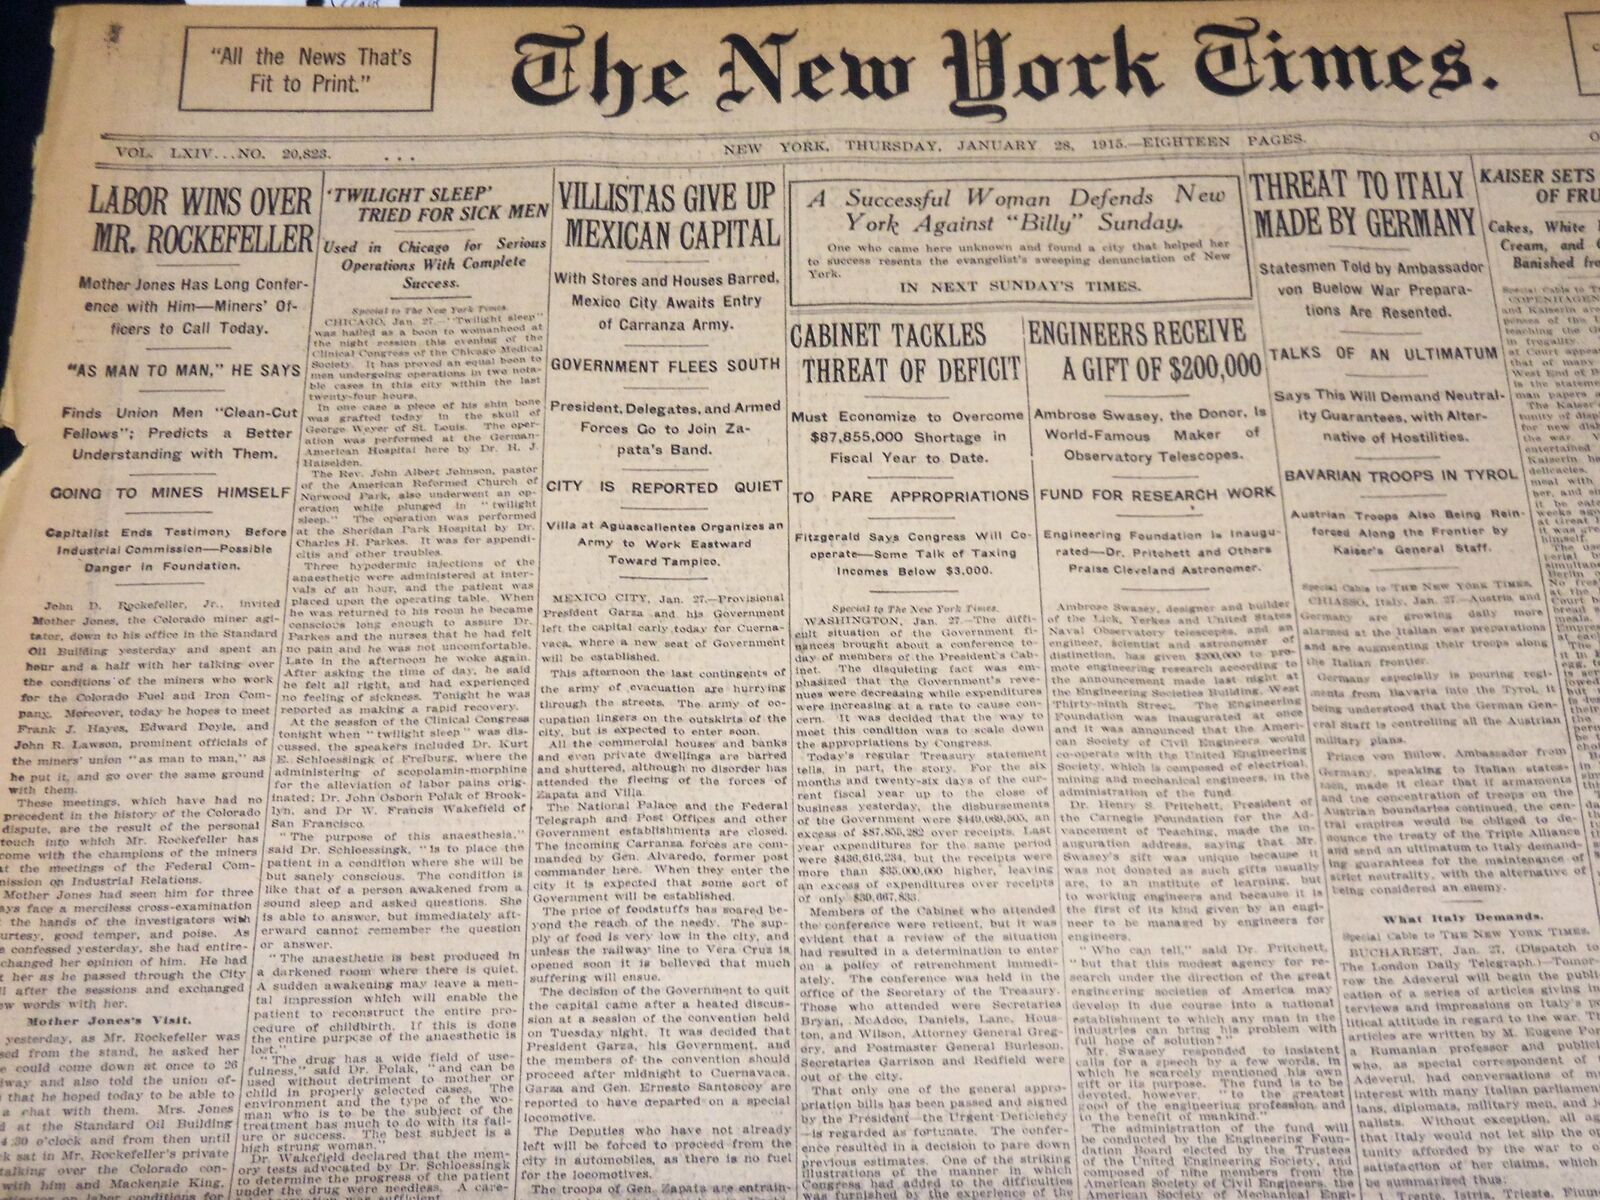 1915 JANUARY 28 NEW YORK TIMES - LABOR WINS OVER MR. ROCKEFLLER - NT 7828